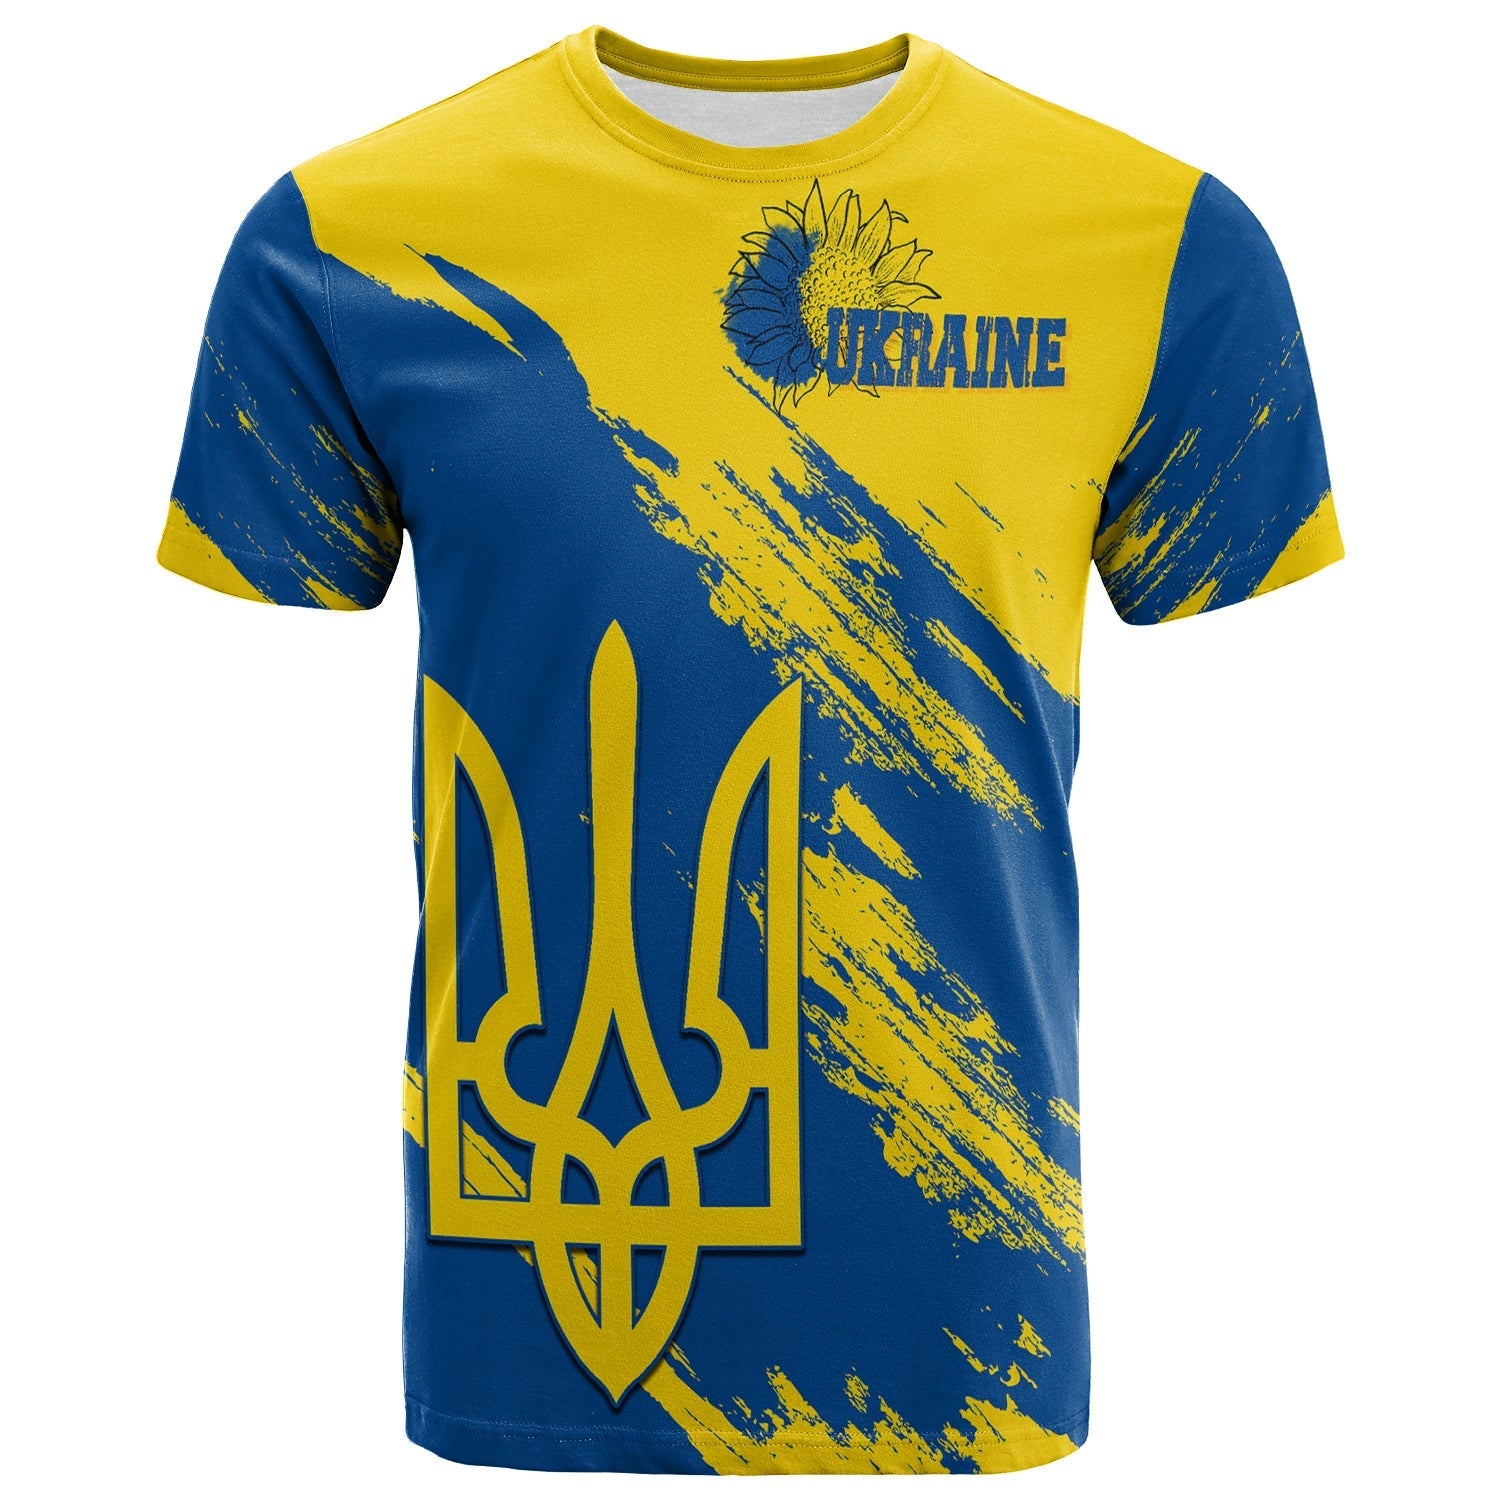 ukraine-t-shirt-slava-ukraini-grunge-style